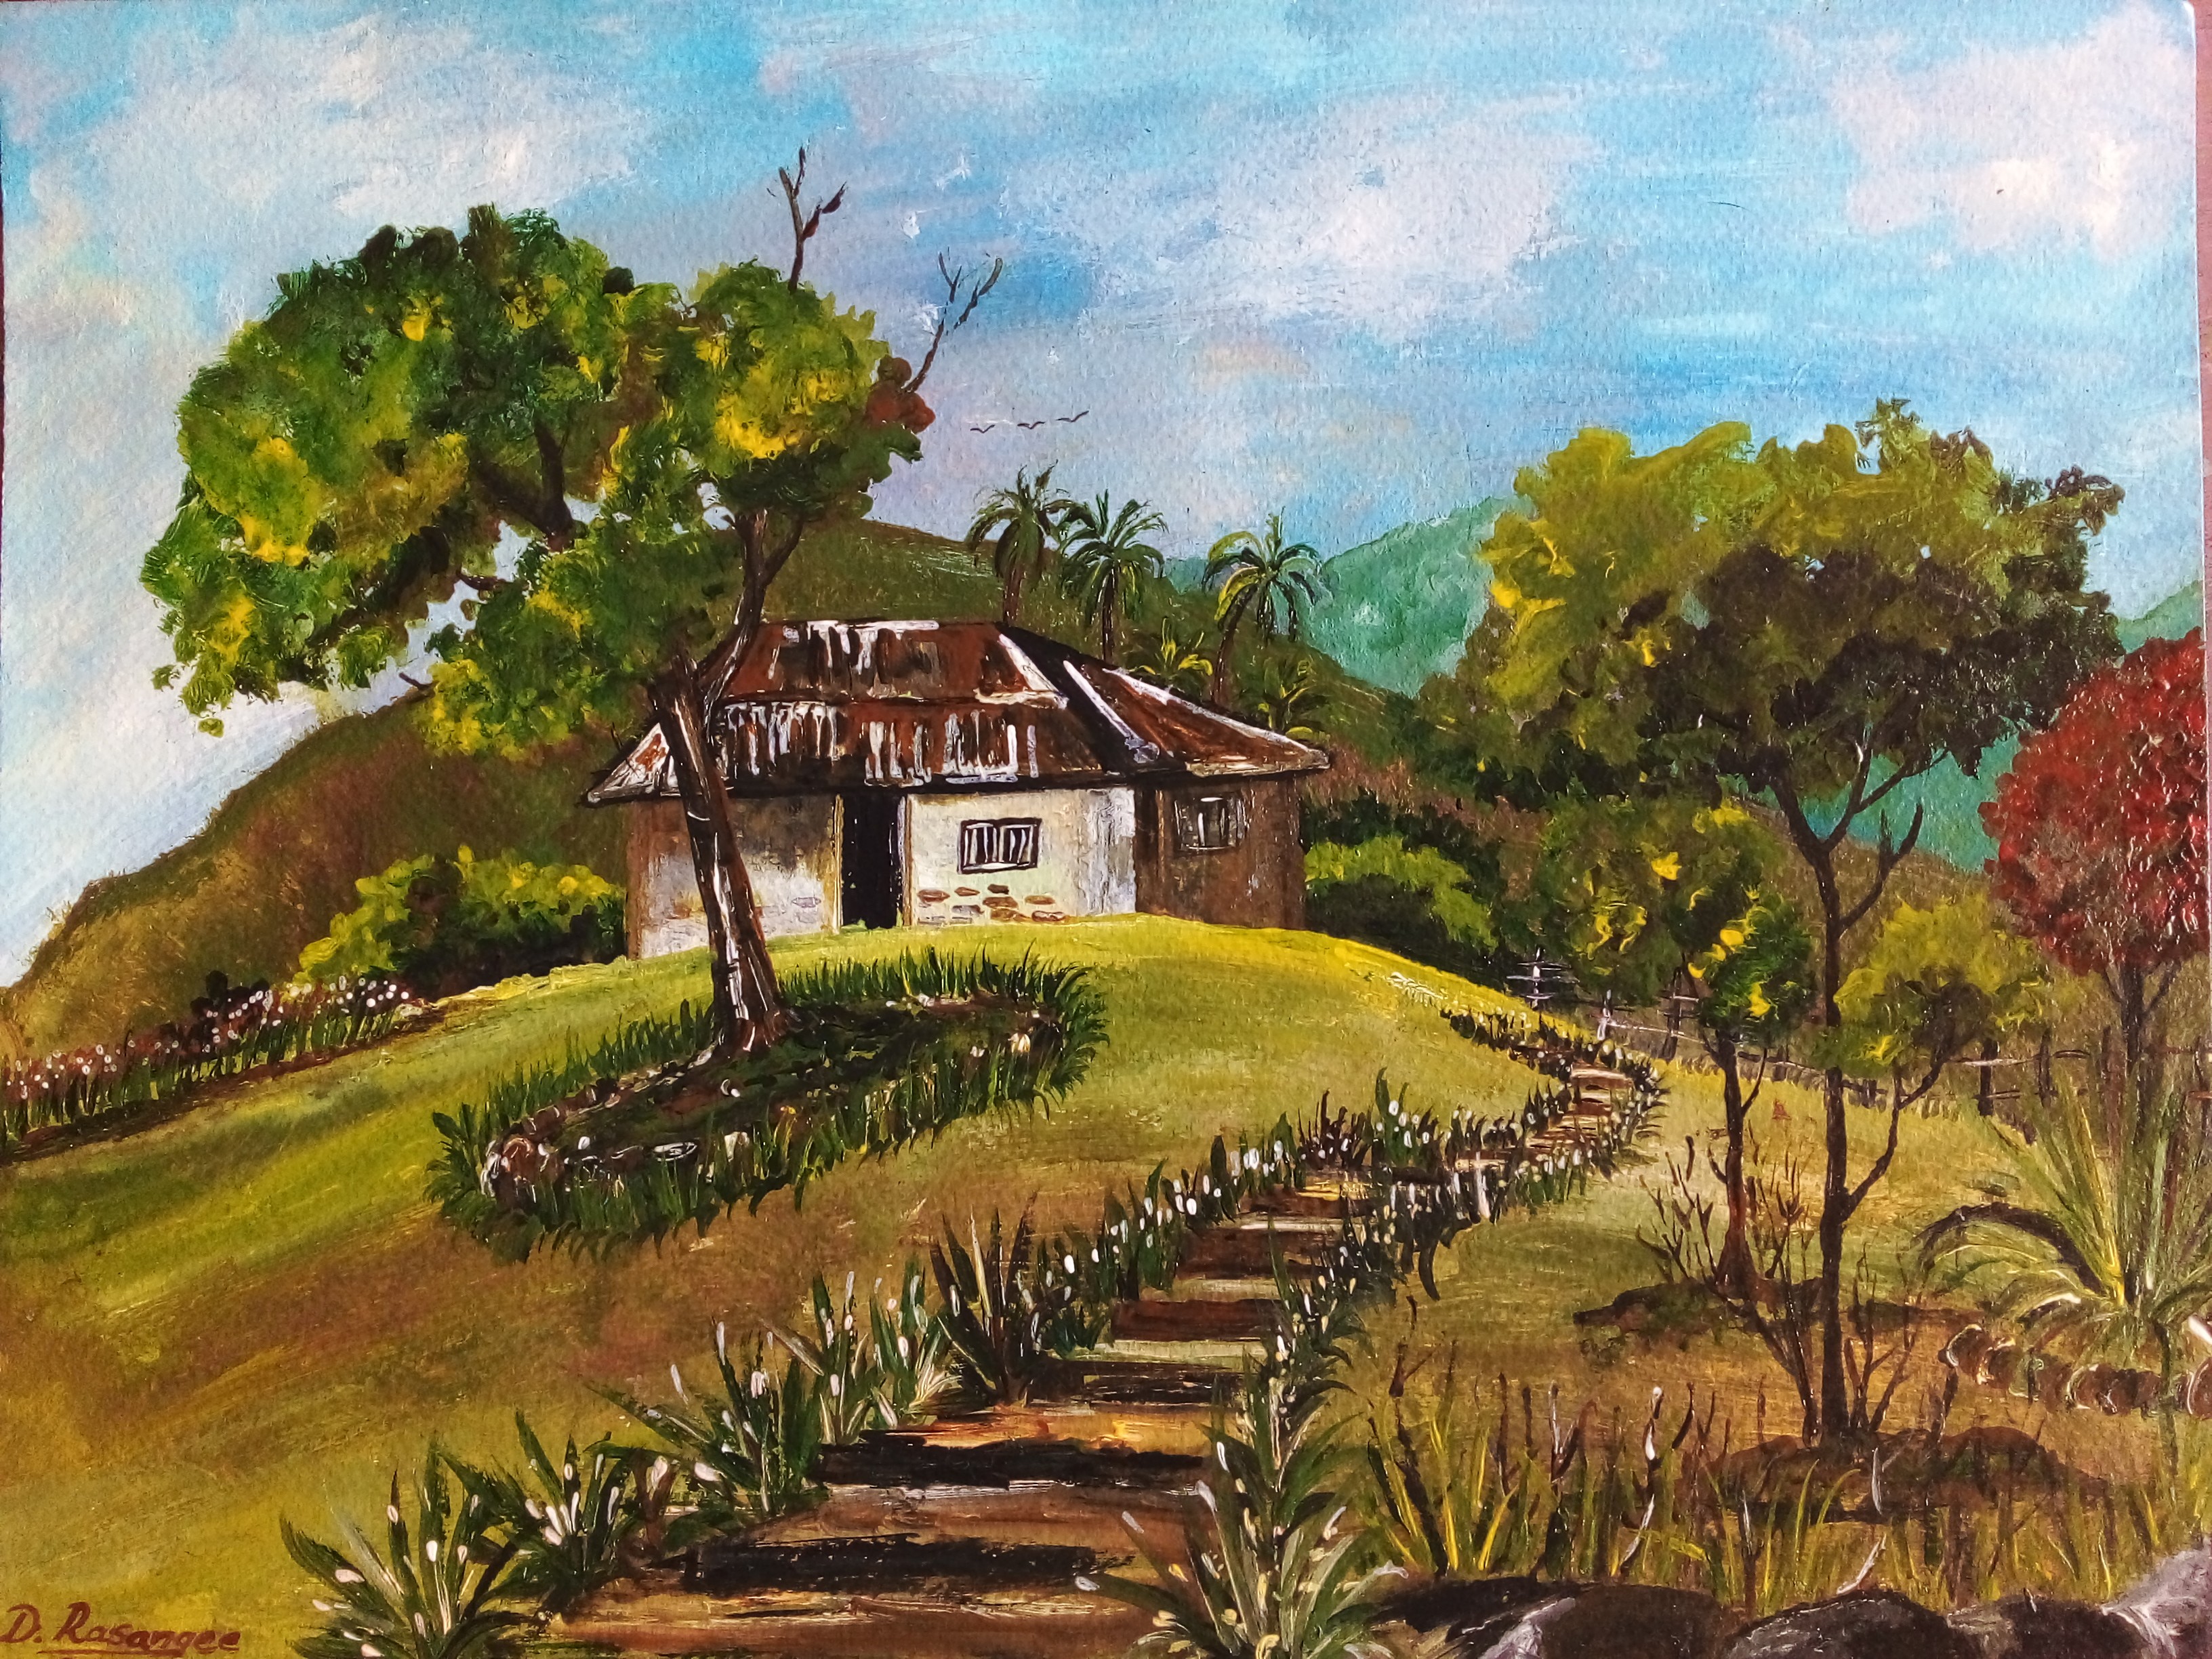 House 06 by Dhamitha Rasangee